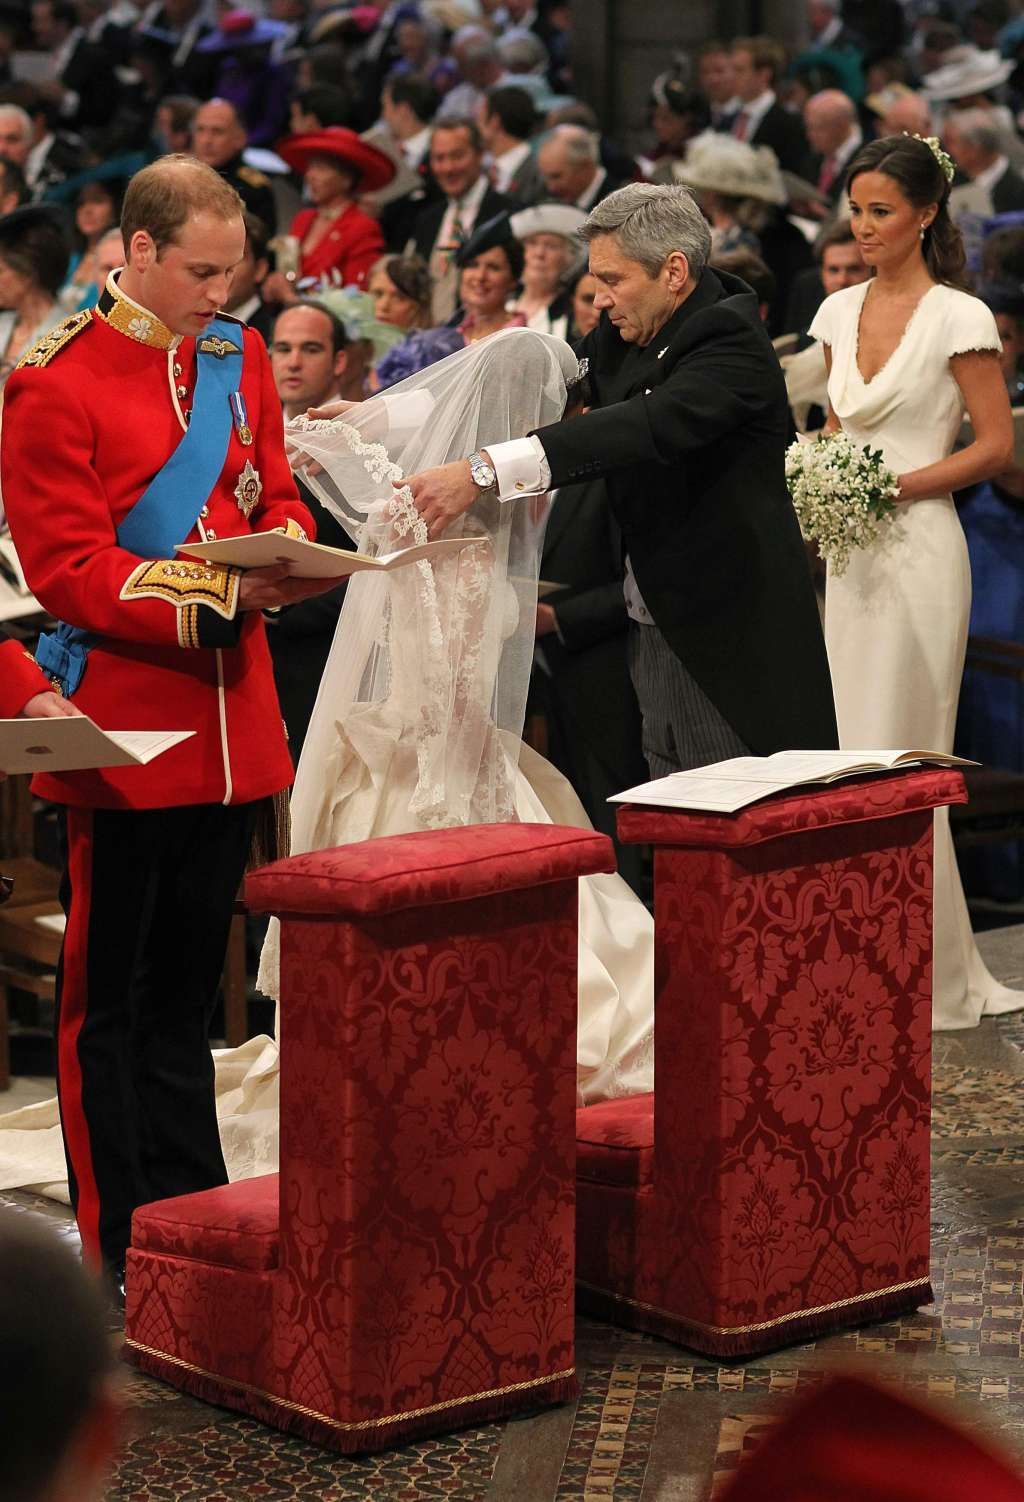 Svatba Williama a Kate - 29. dubna 2011